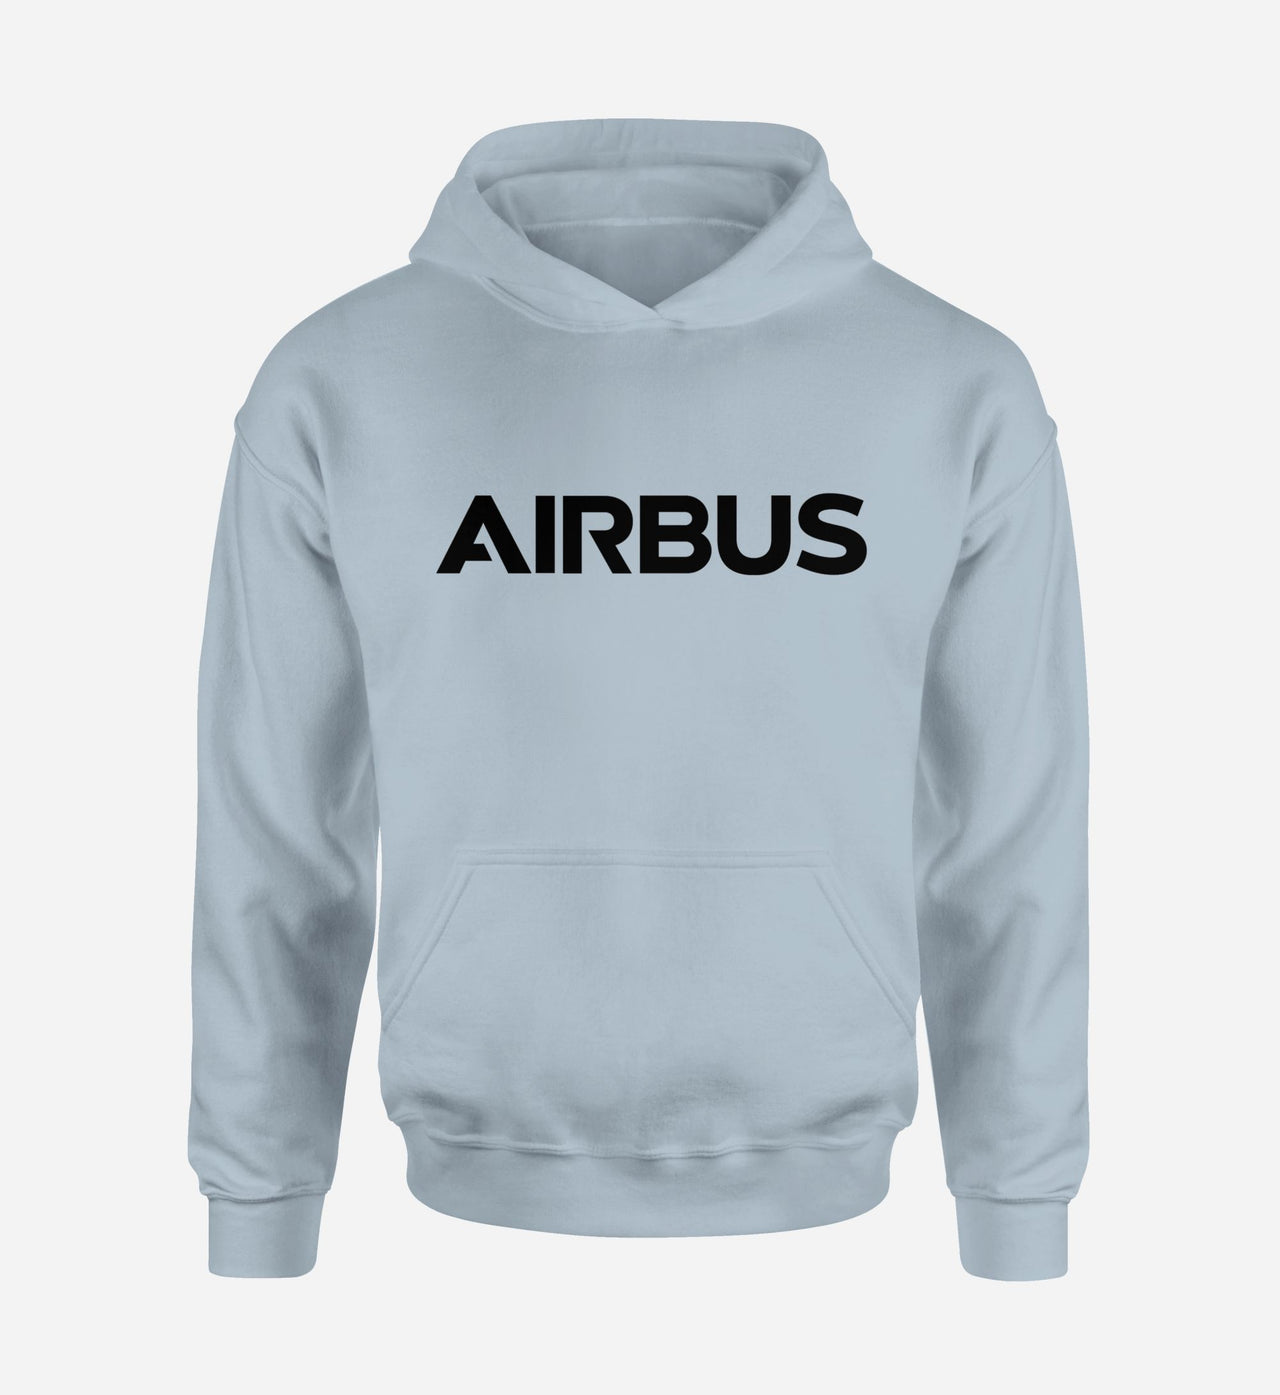 Airbus & Text Designed Hoodies